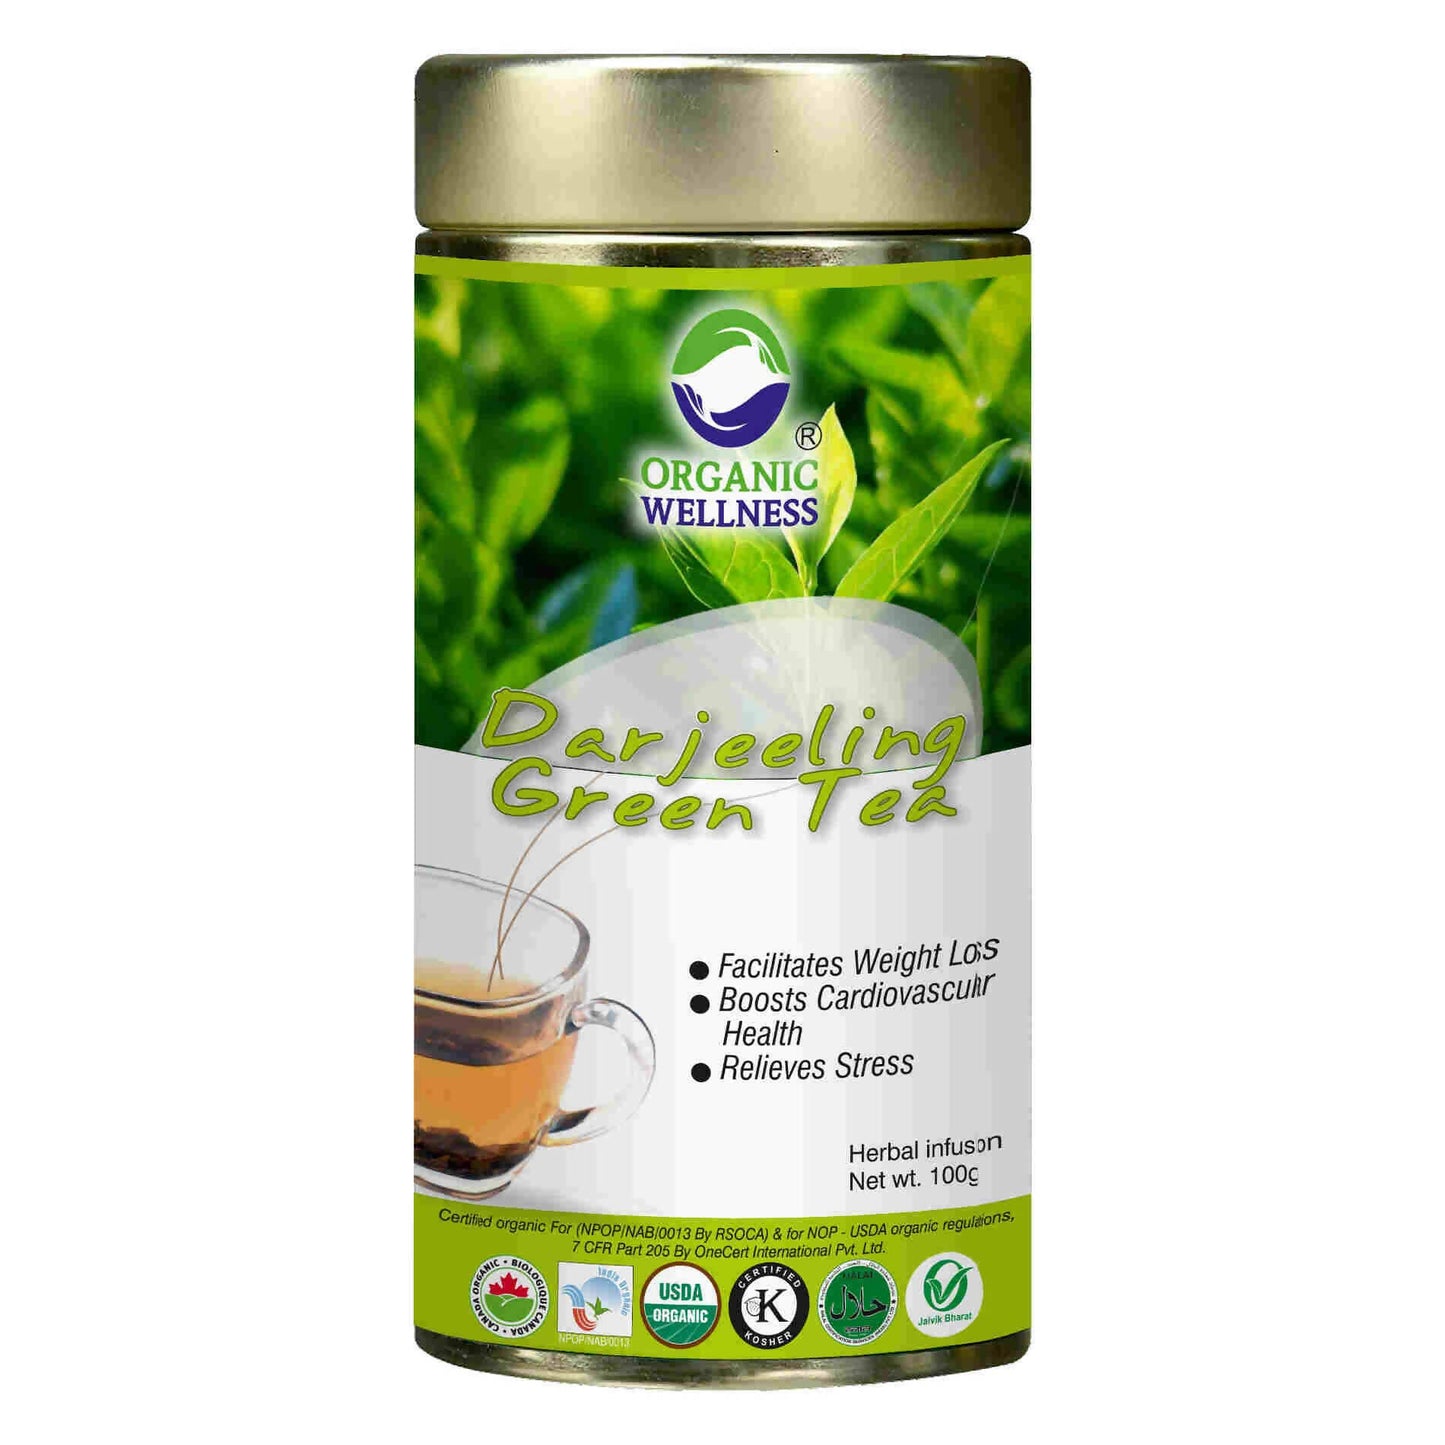 Organic Wellness Darjeeling Tea - BUDNE